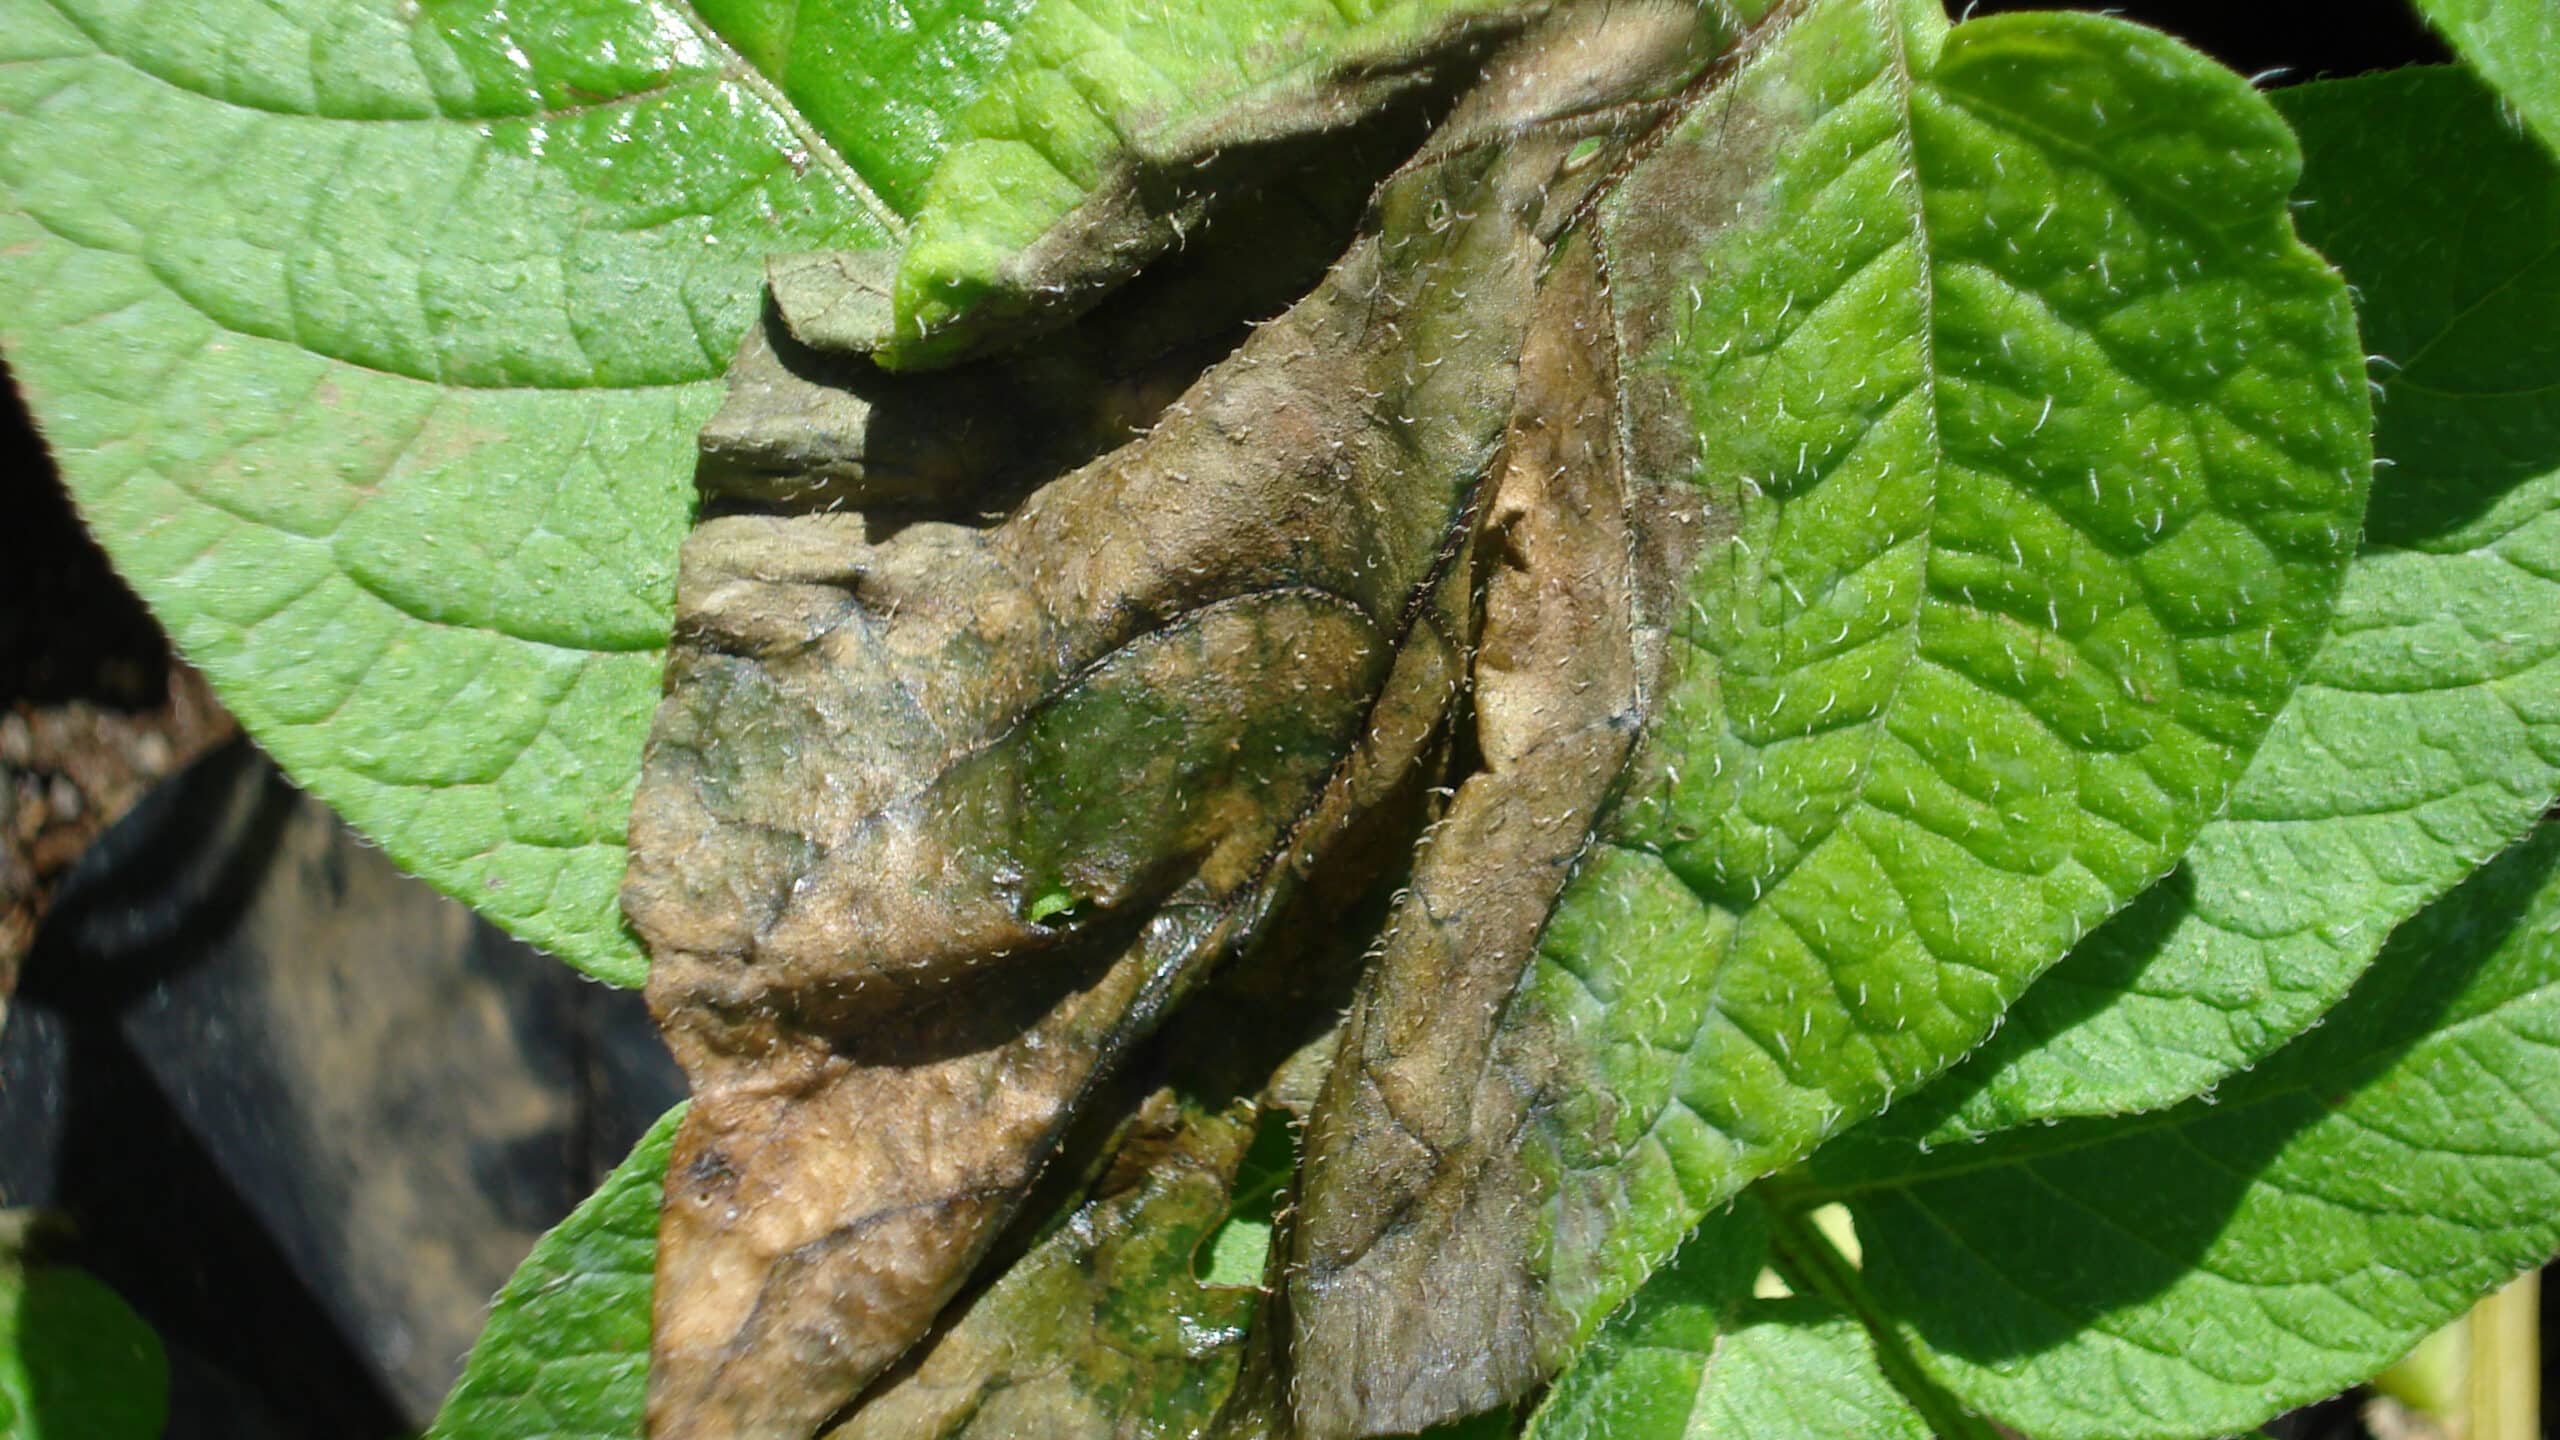 Potato plant with leaf blight